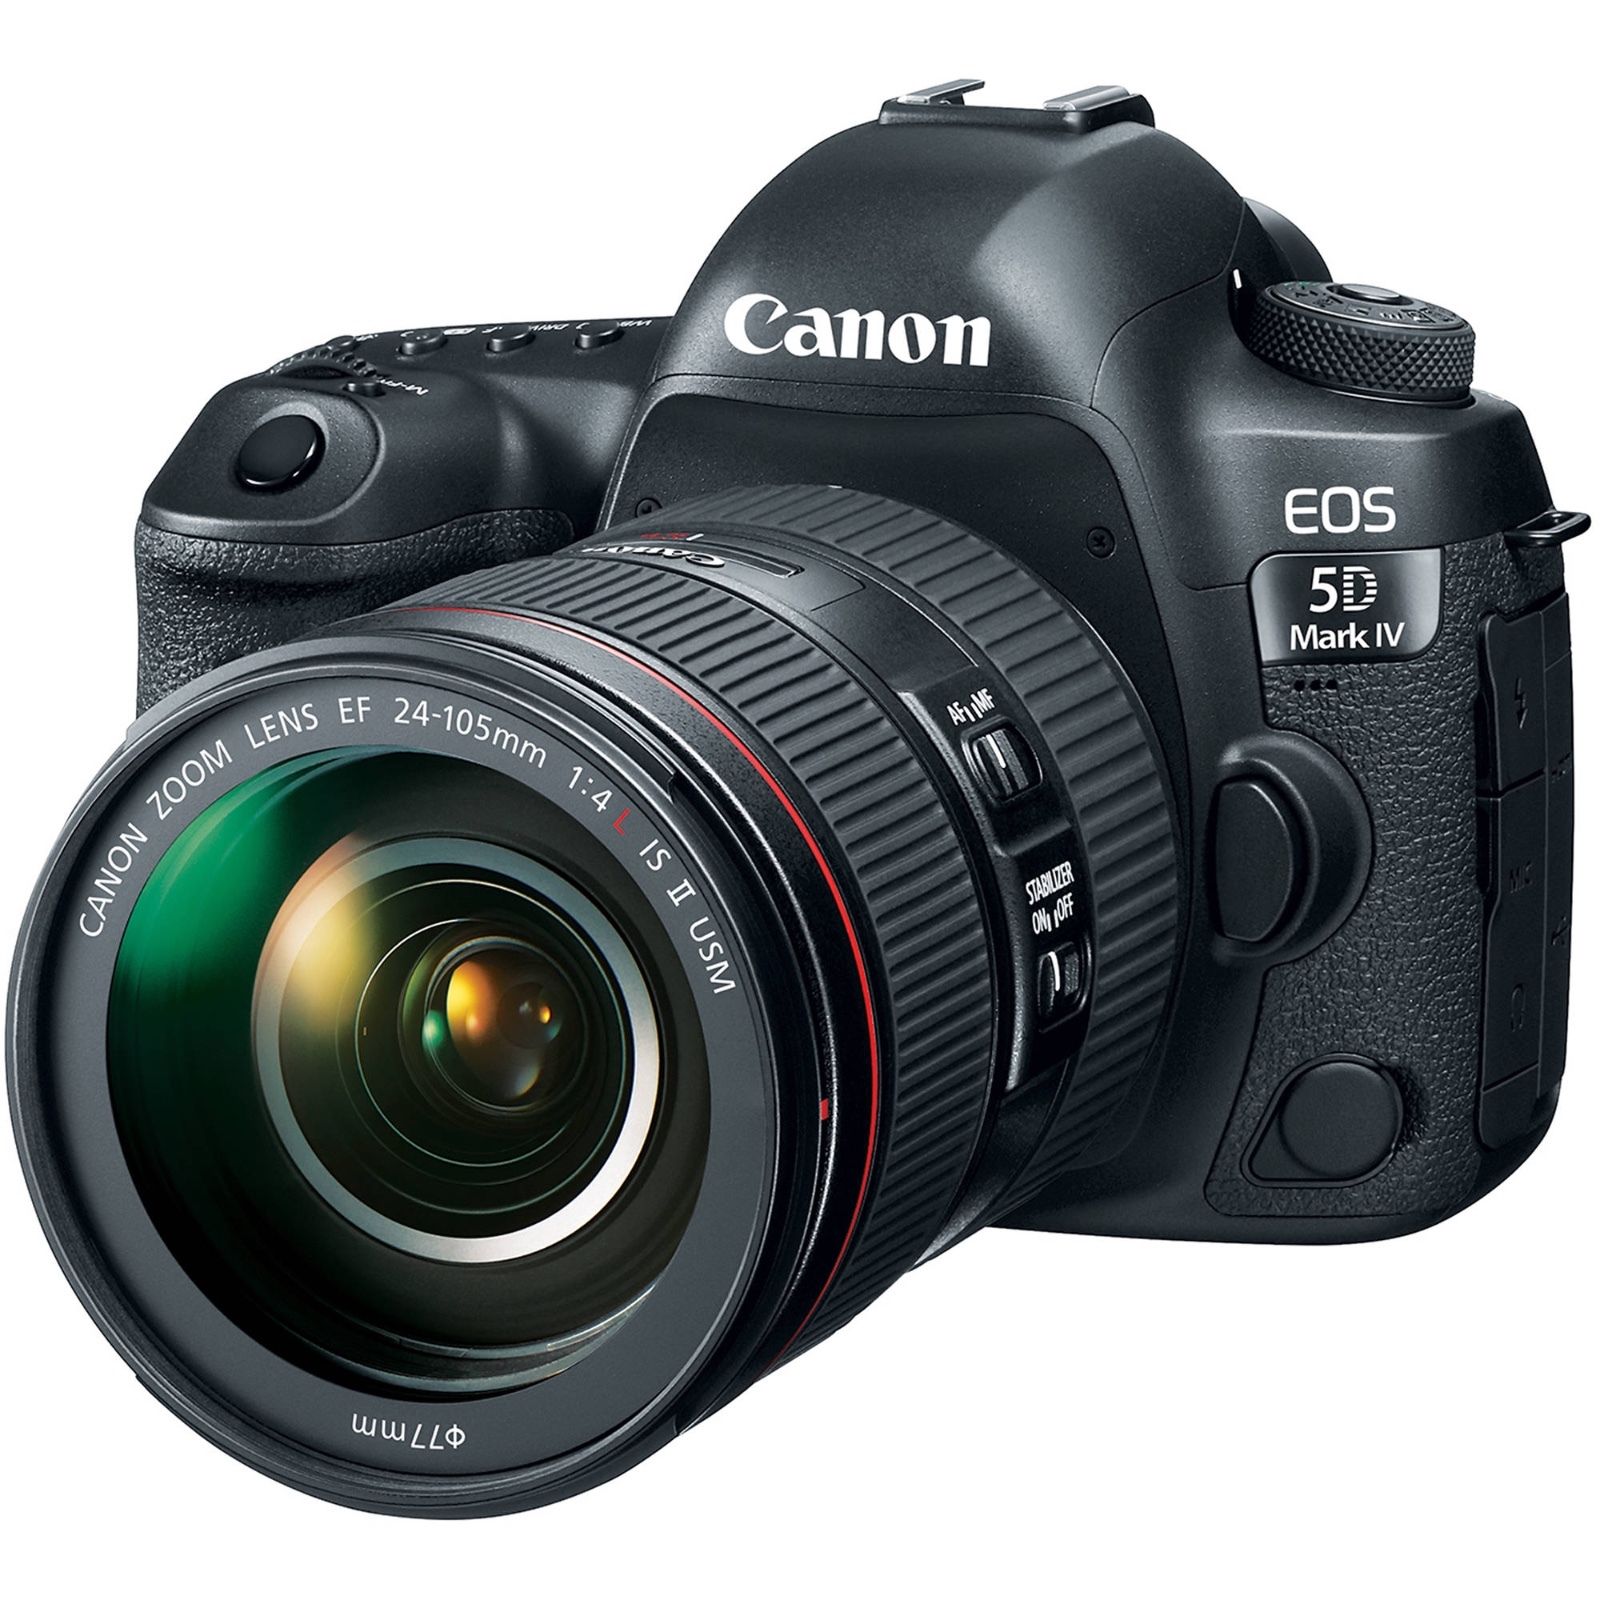 Neu Canon EOS 5D Mark IV Digital SLR Camera w/ EF 24-105mm f/4L IS II USM Lens